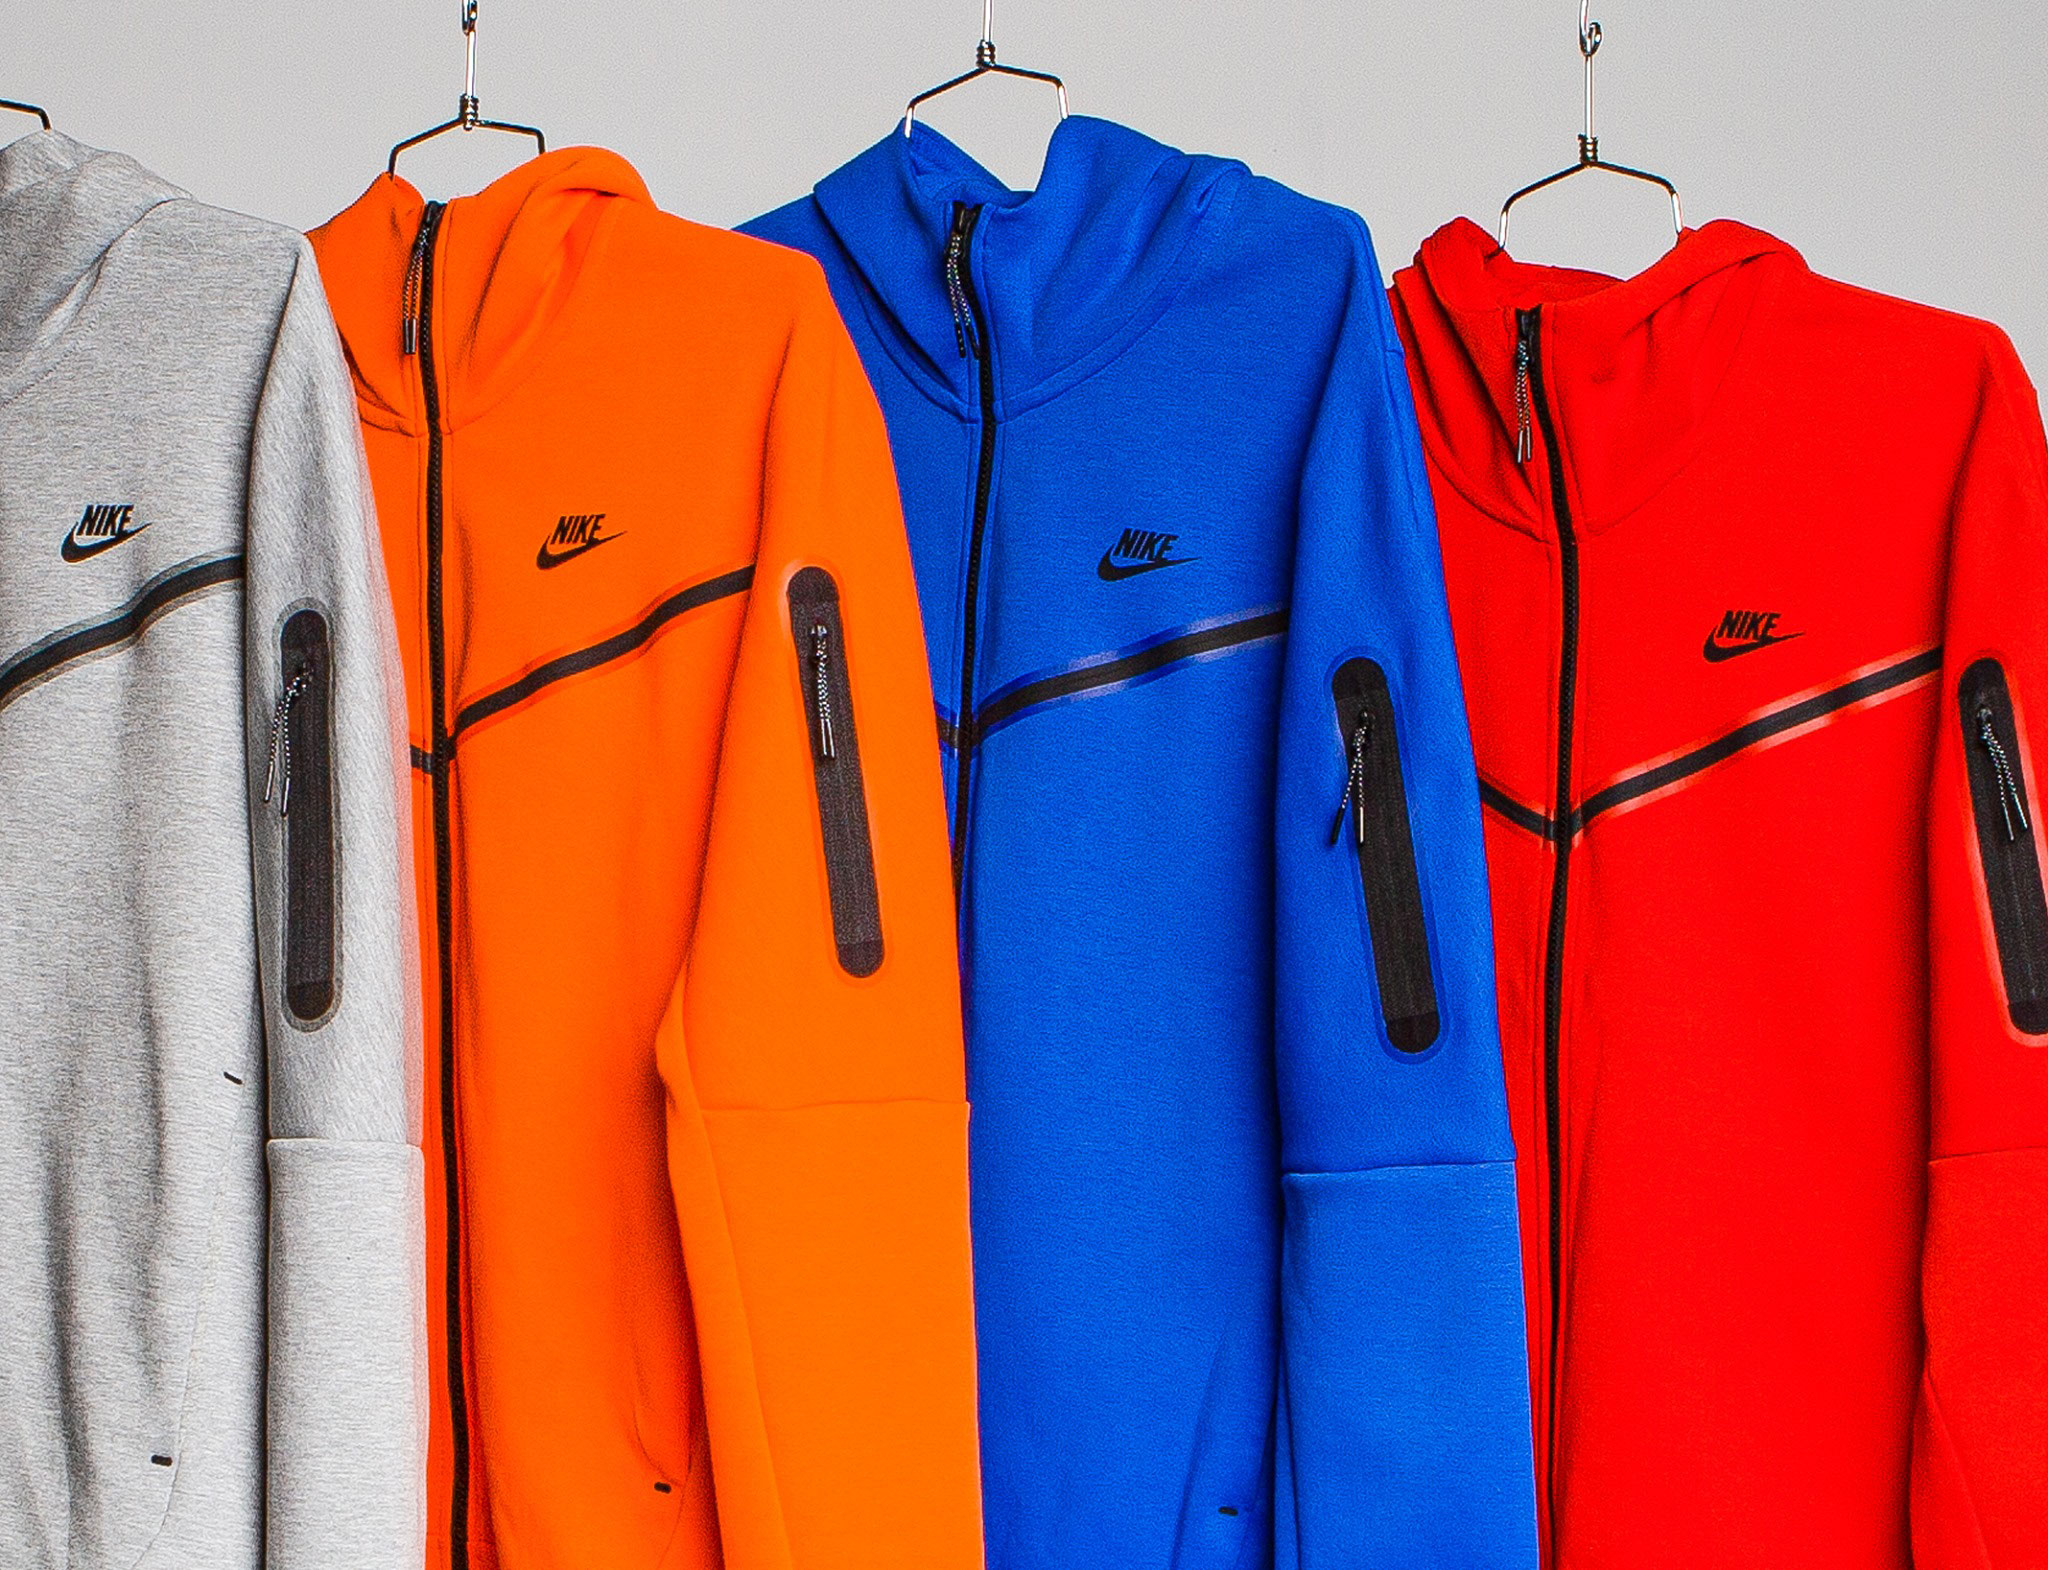 Nike Tech Fleece Hoodies Fall 2020 Colors